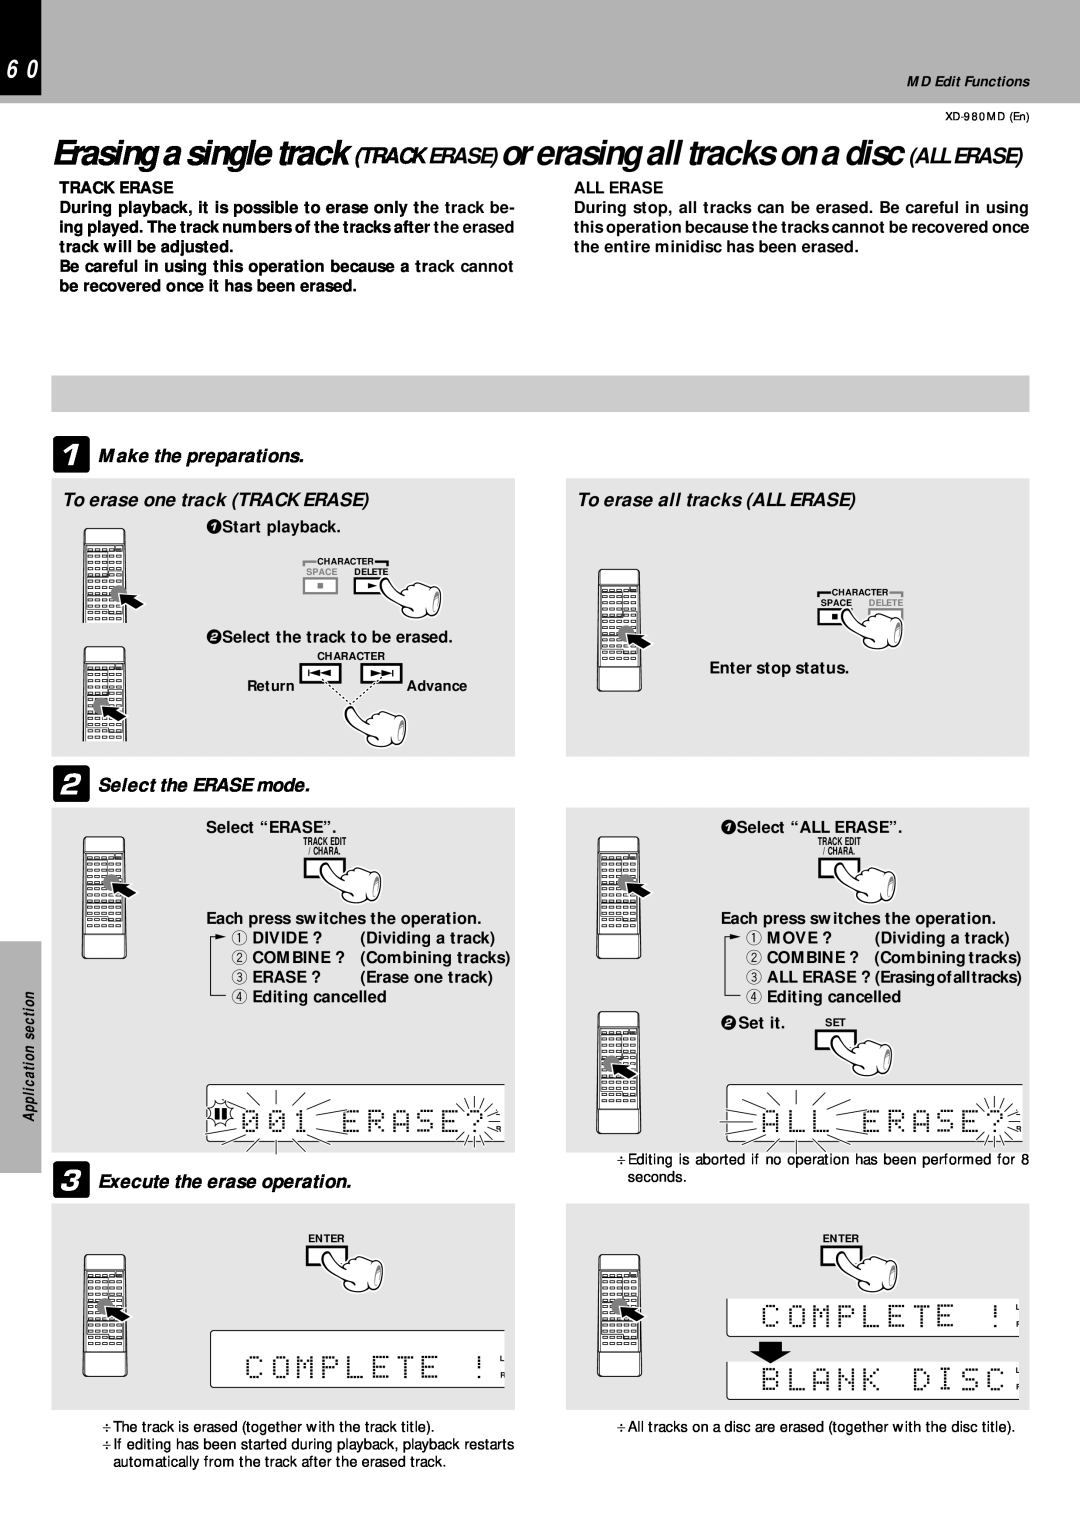 Kenwood XD-980MD instruction manual C O M P L E T E !L, A L L Er A S E ? L, B L A N K D I S C L, 1Make the preparations 